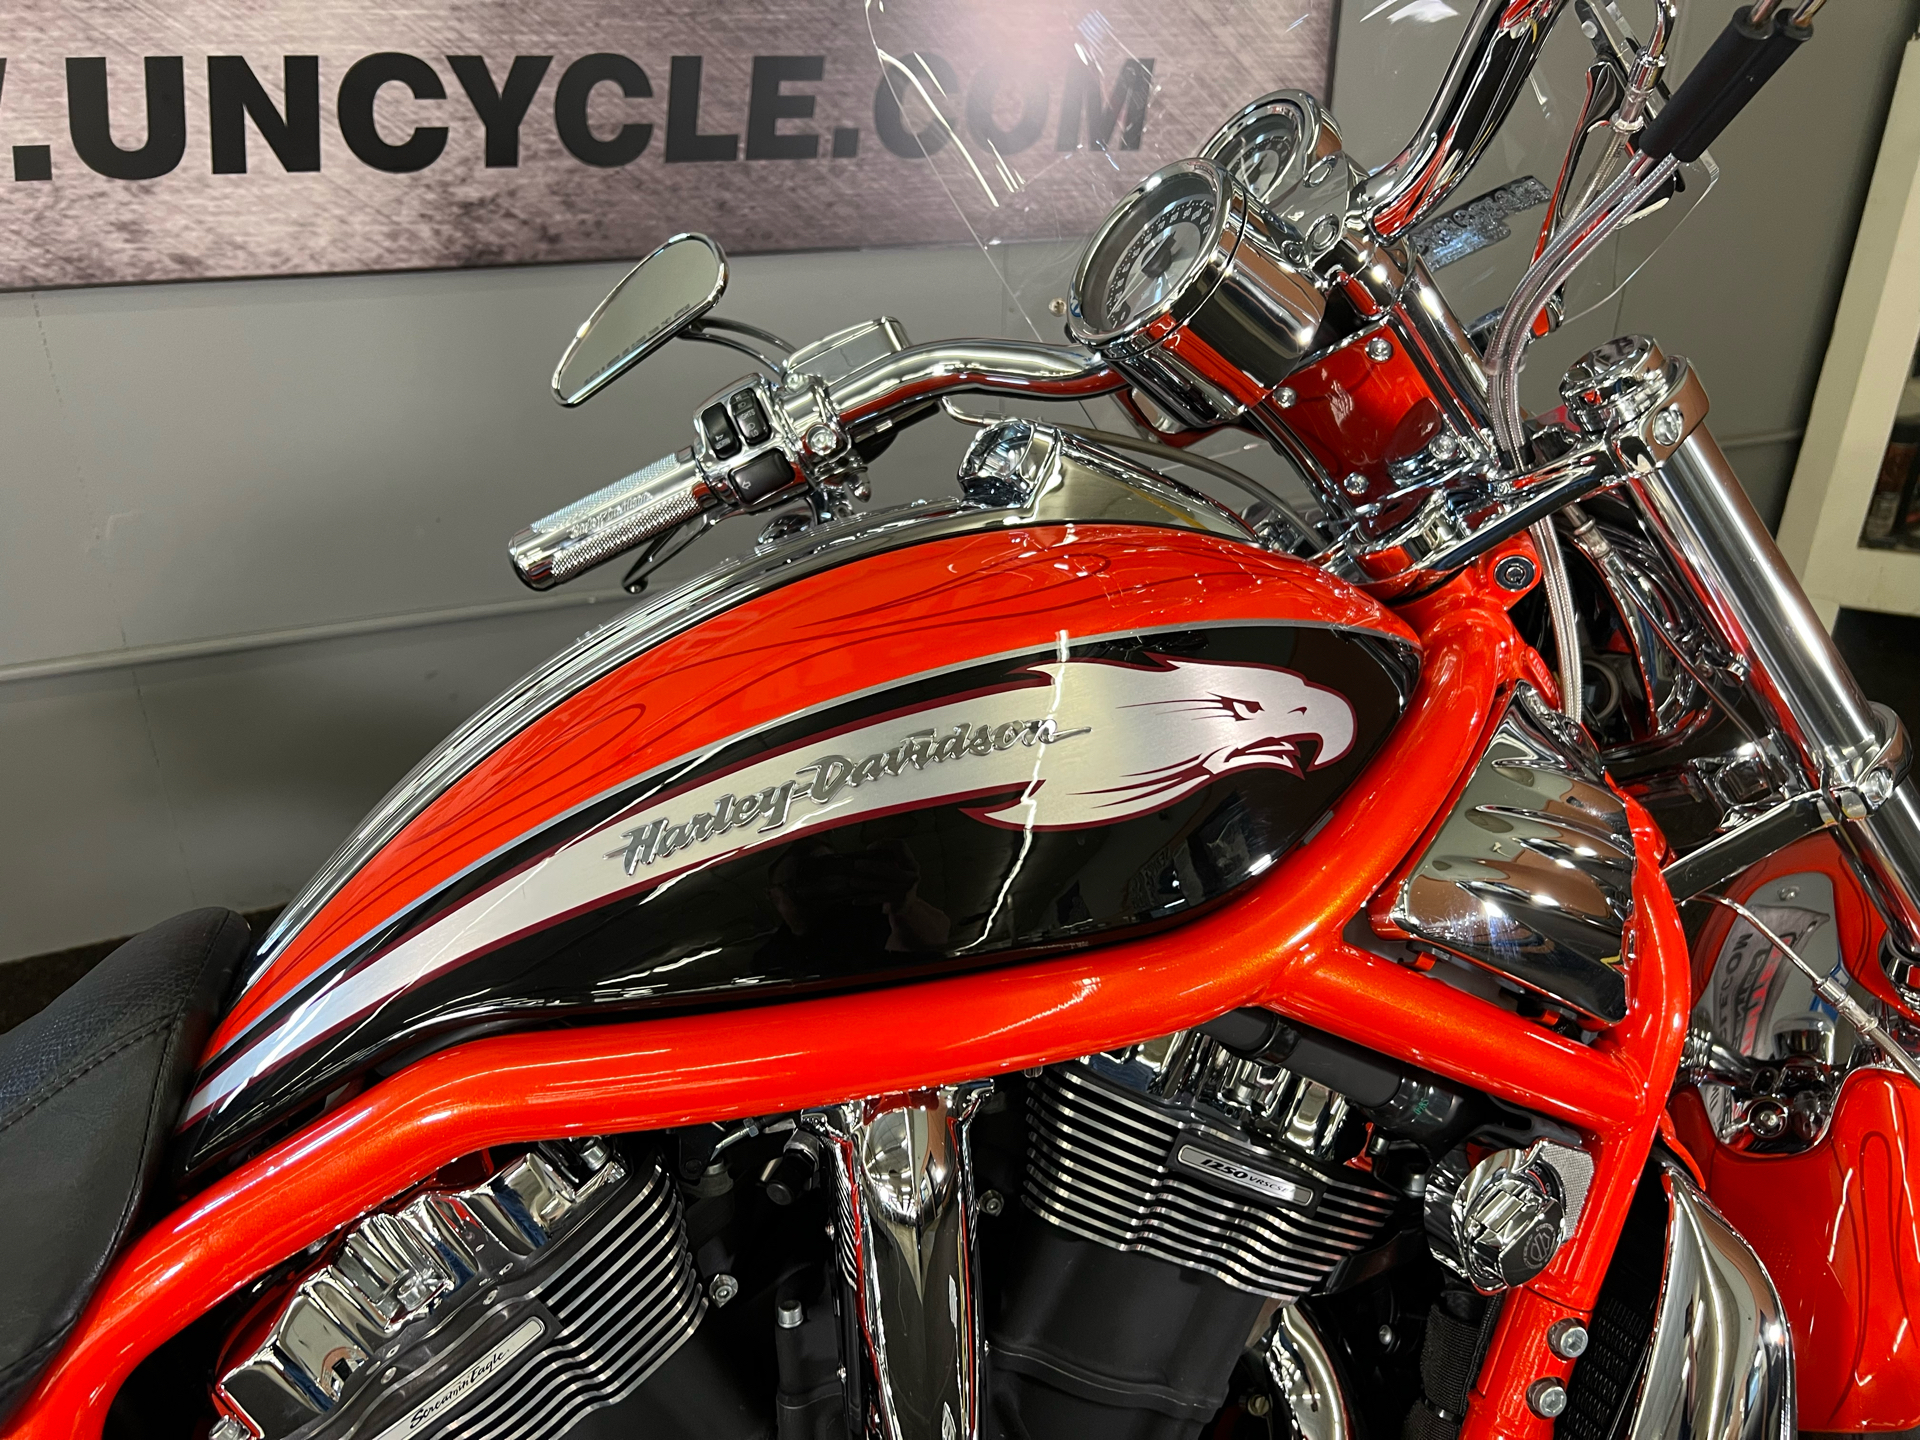 2006 Harley-Davidson CVO™ Screamin' Eagle® V-Rod® in Tyrone, Pennsylvania - Photo 5